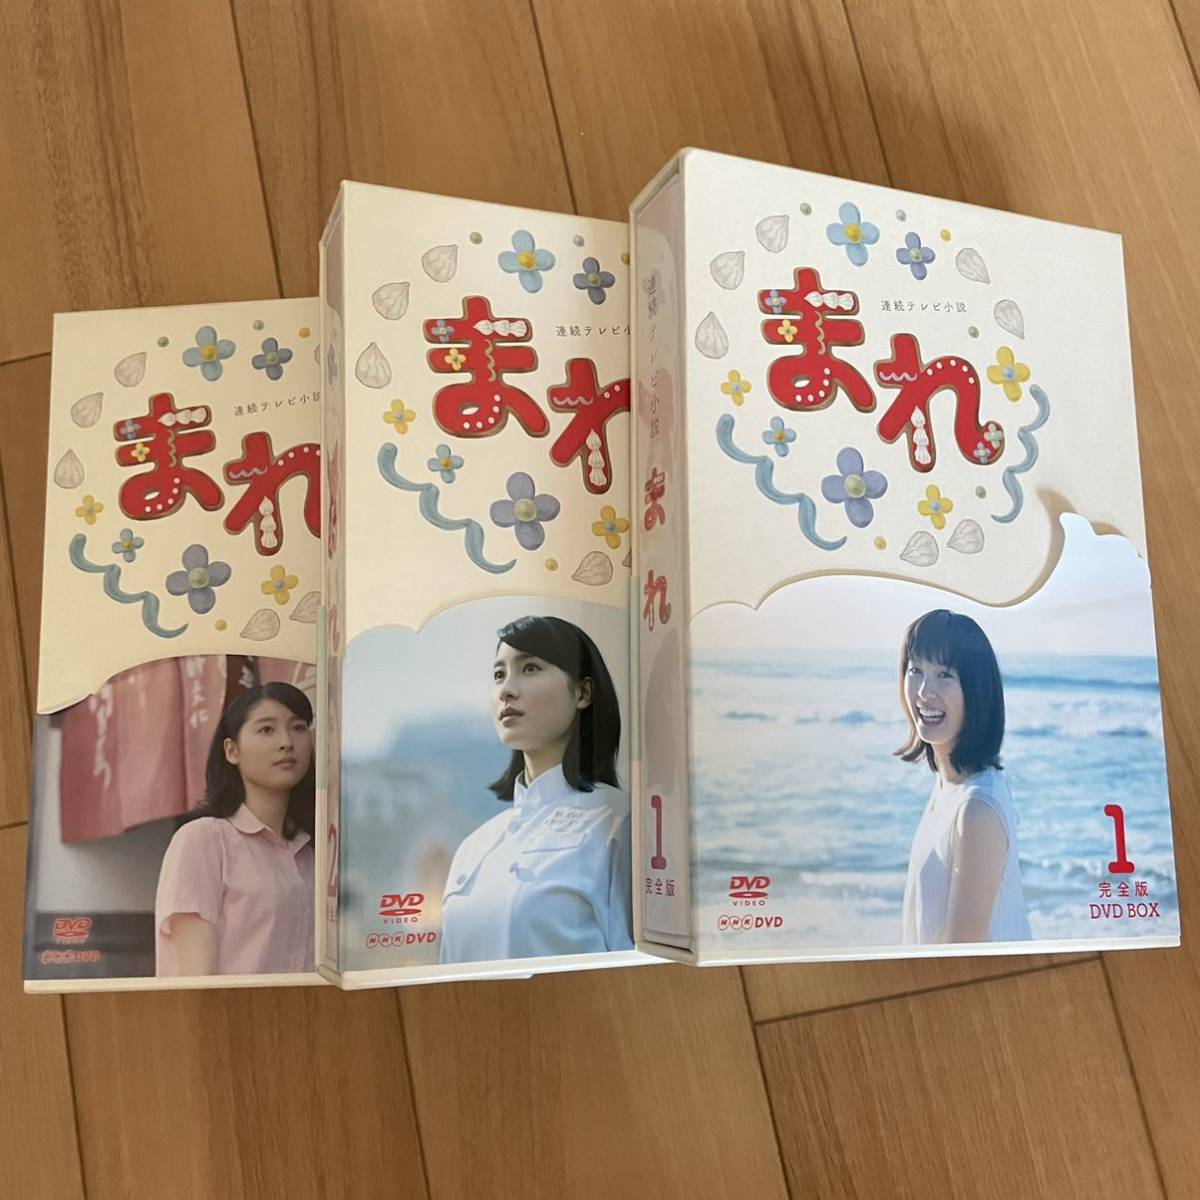 NHK 連続テレビ小説 まれ 完全版 ブルーレイ DVD ボックス www